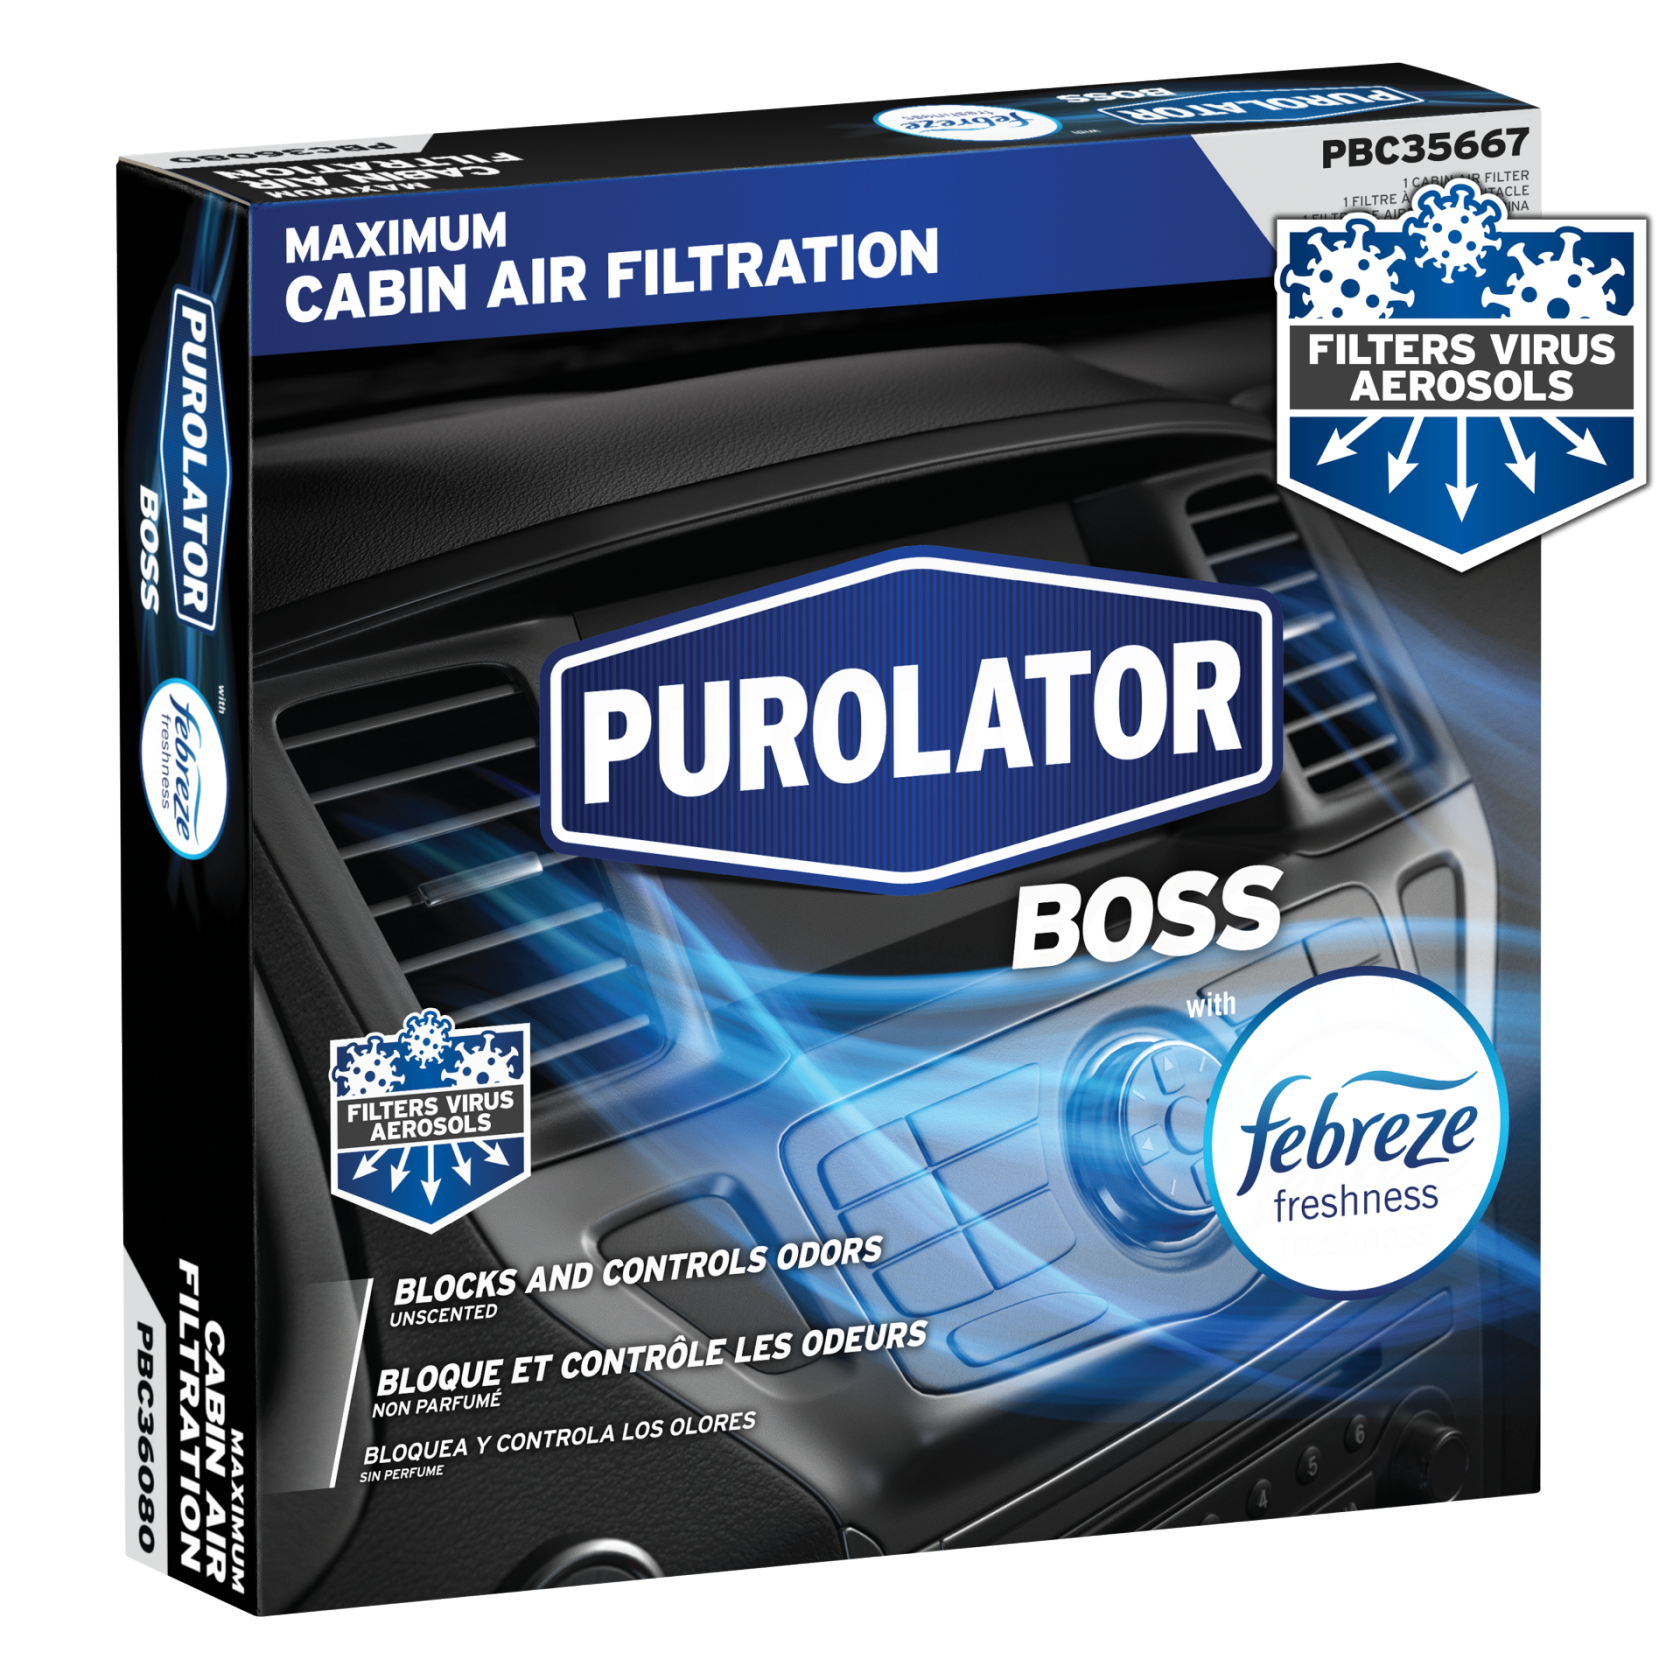 PurolatorBOSS® Maximum Cabin Air Filters with Febreze Freshness block and control harmful contaminants.